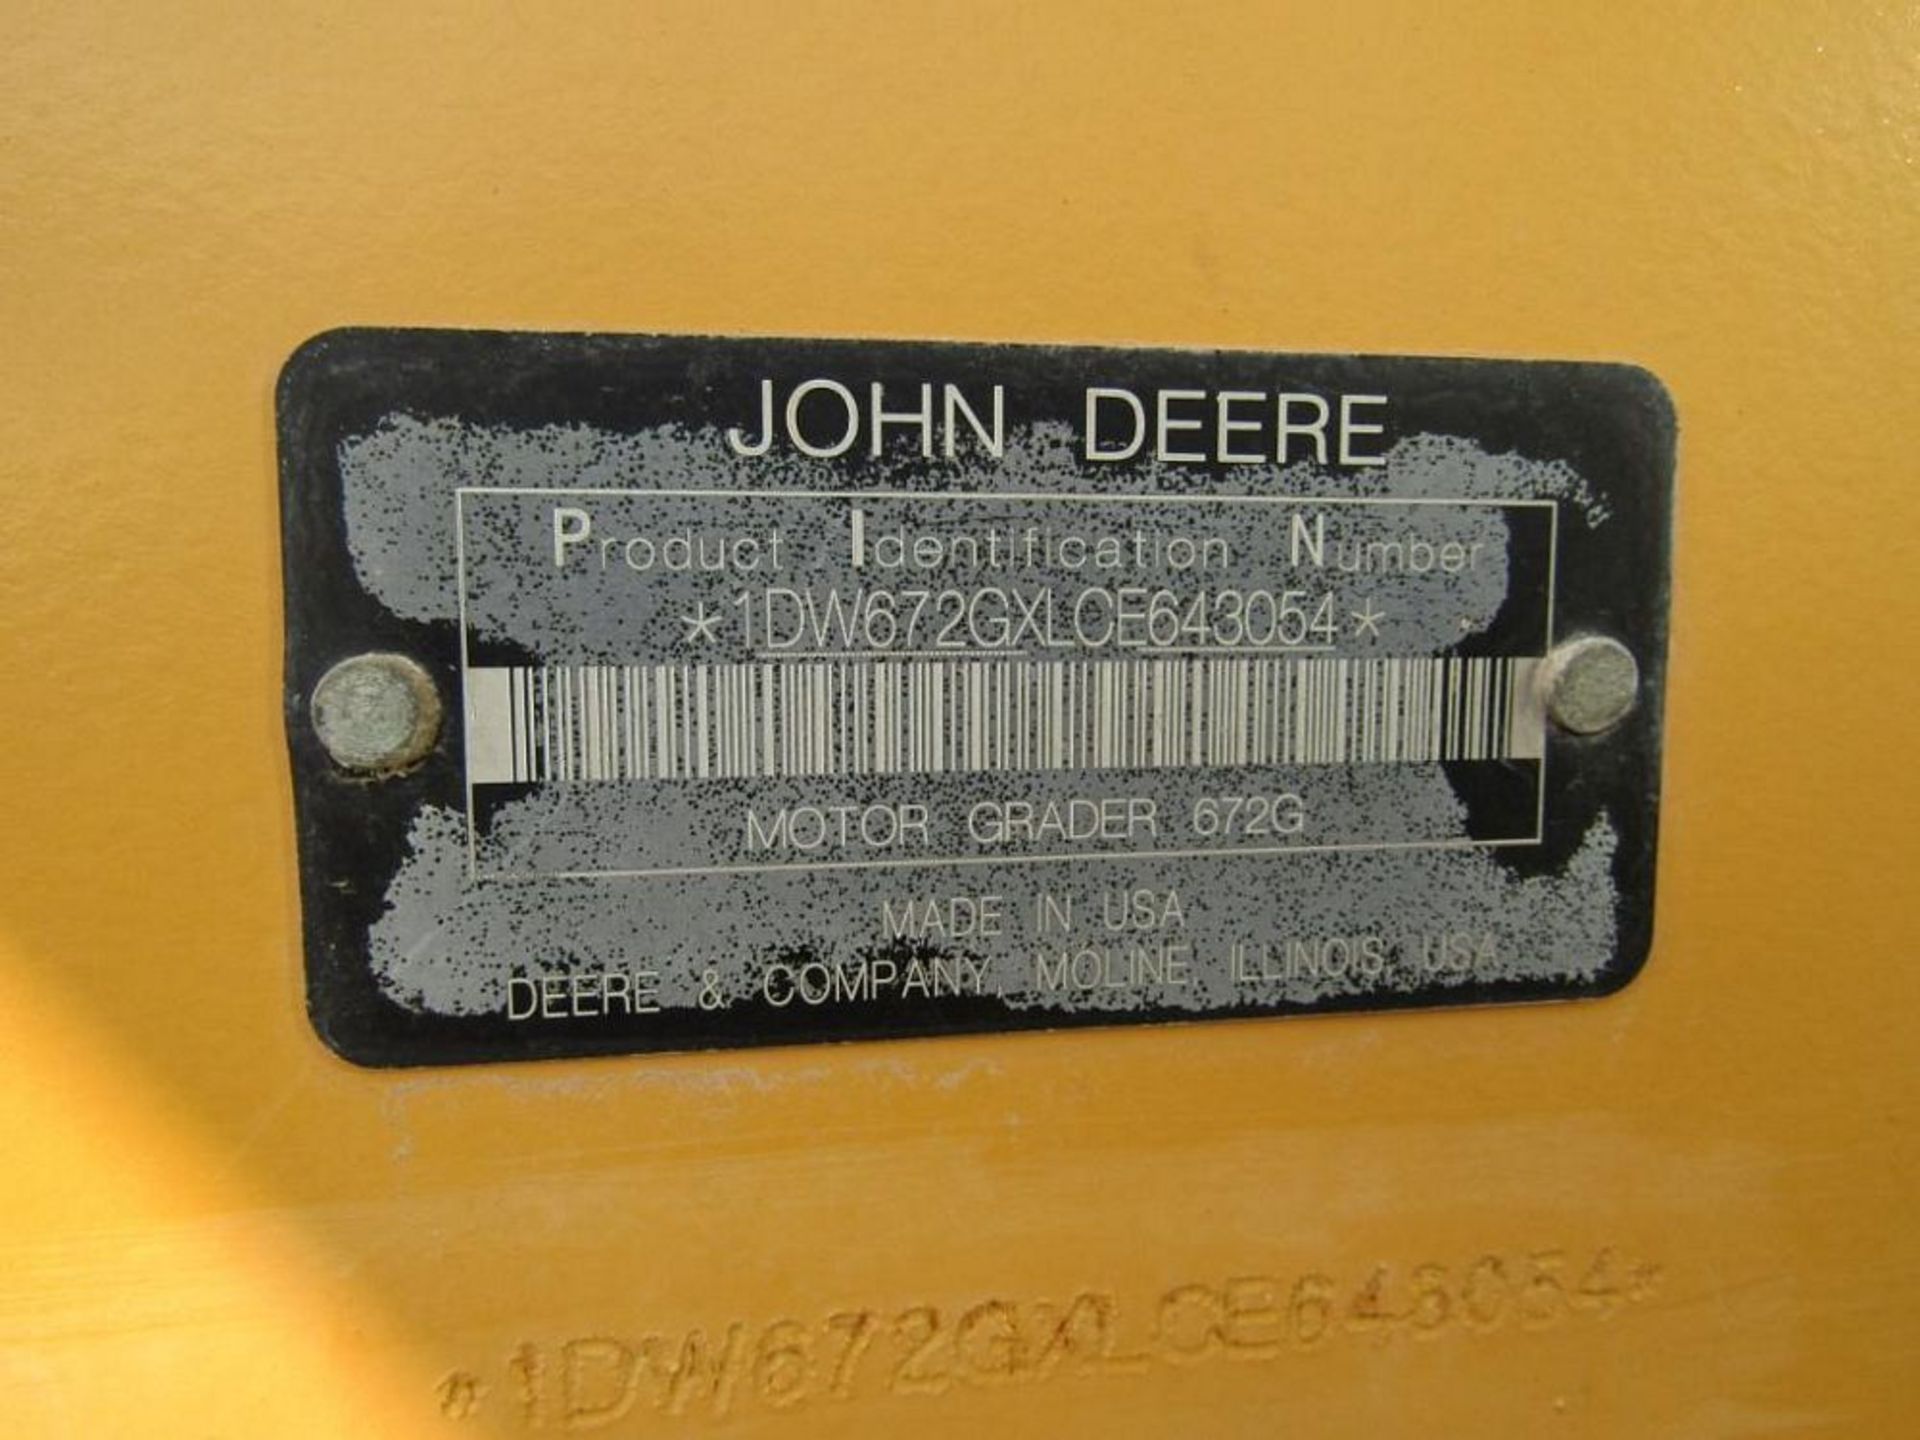 John Deere 672 G Motor Grader, Hydraulic Ripper, 14 ft. Blade, S/N 1DW672GXLCE6430054 #752 - Image 10 of 10